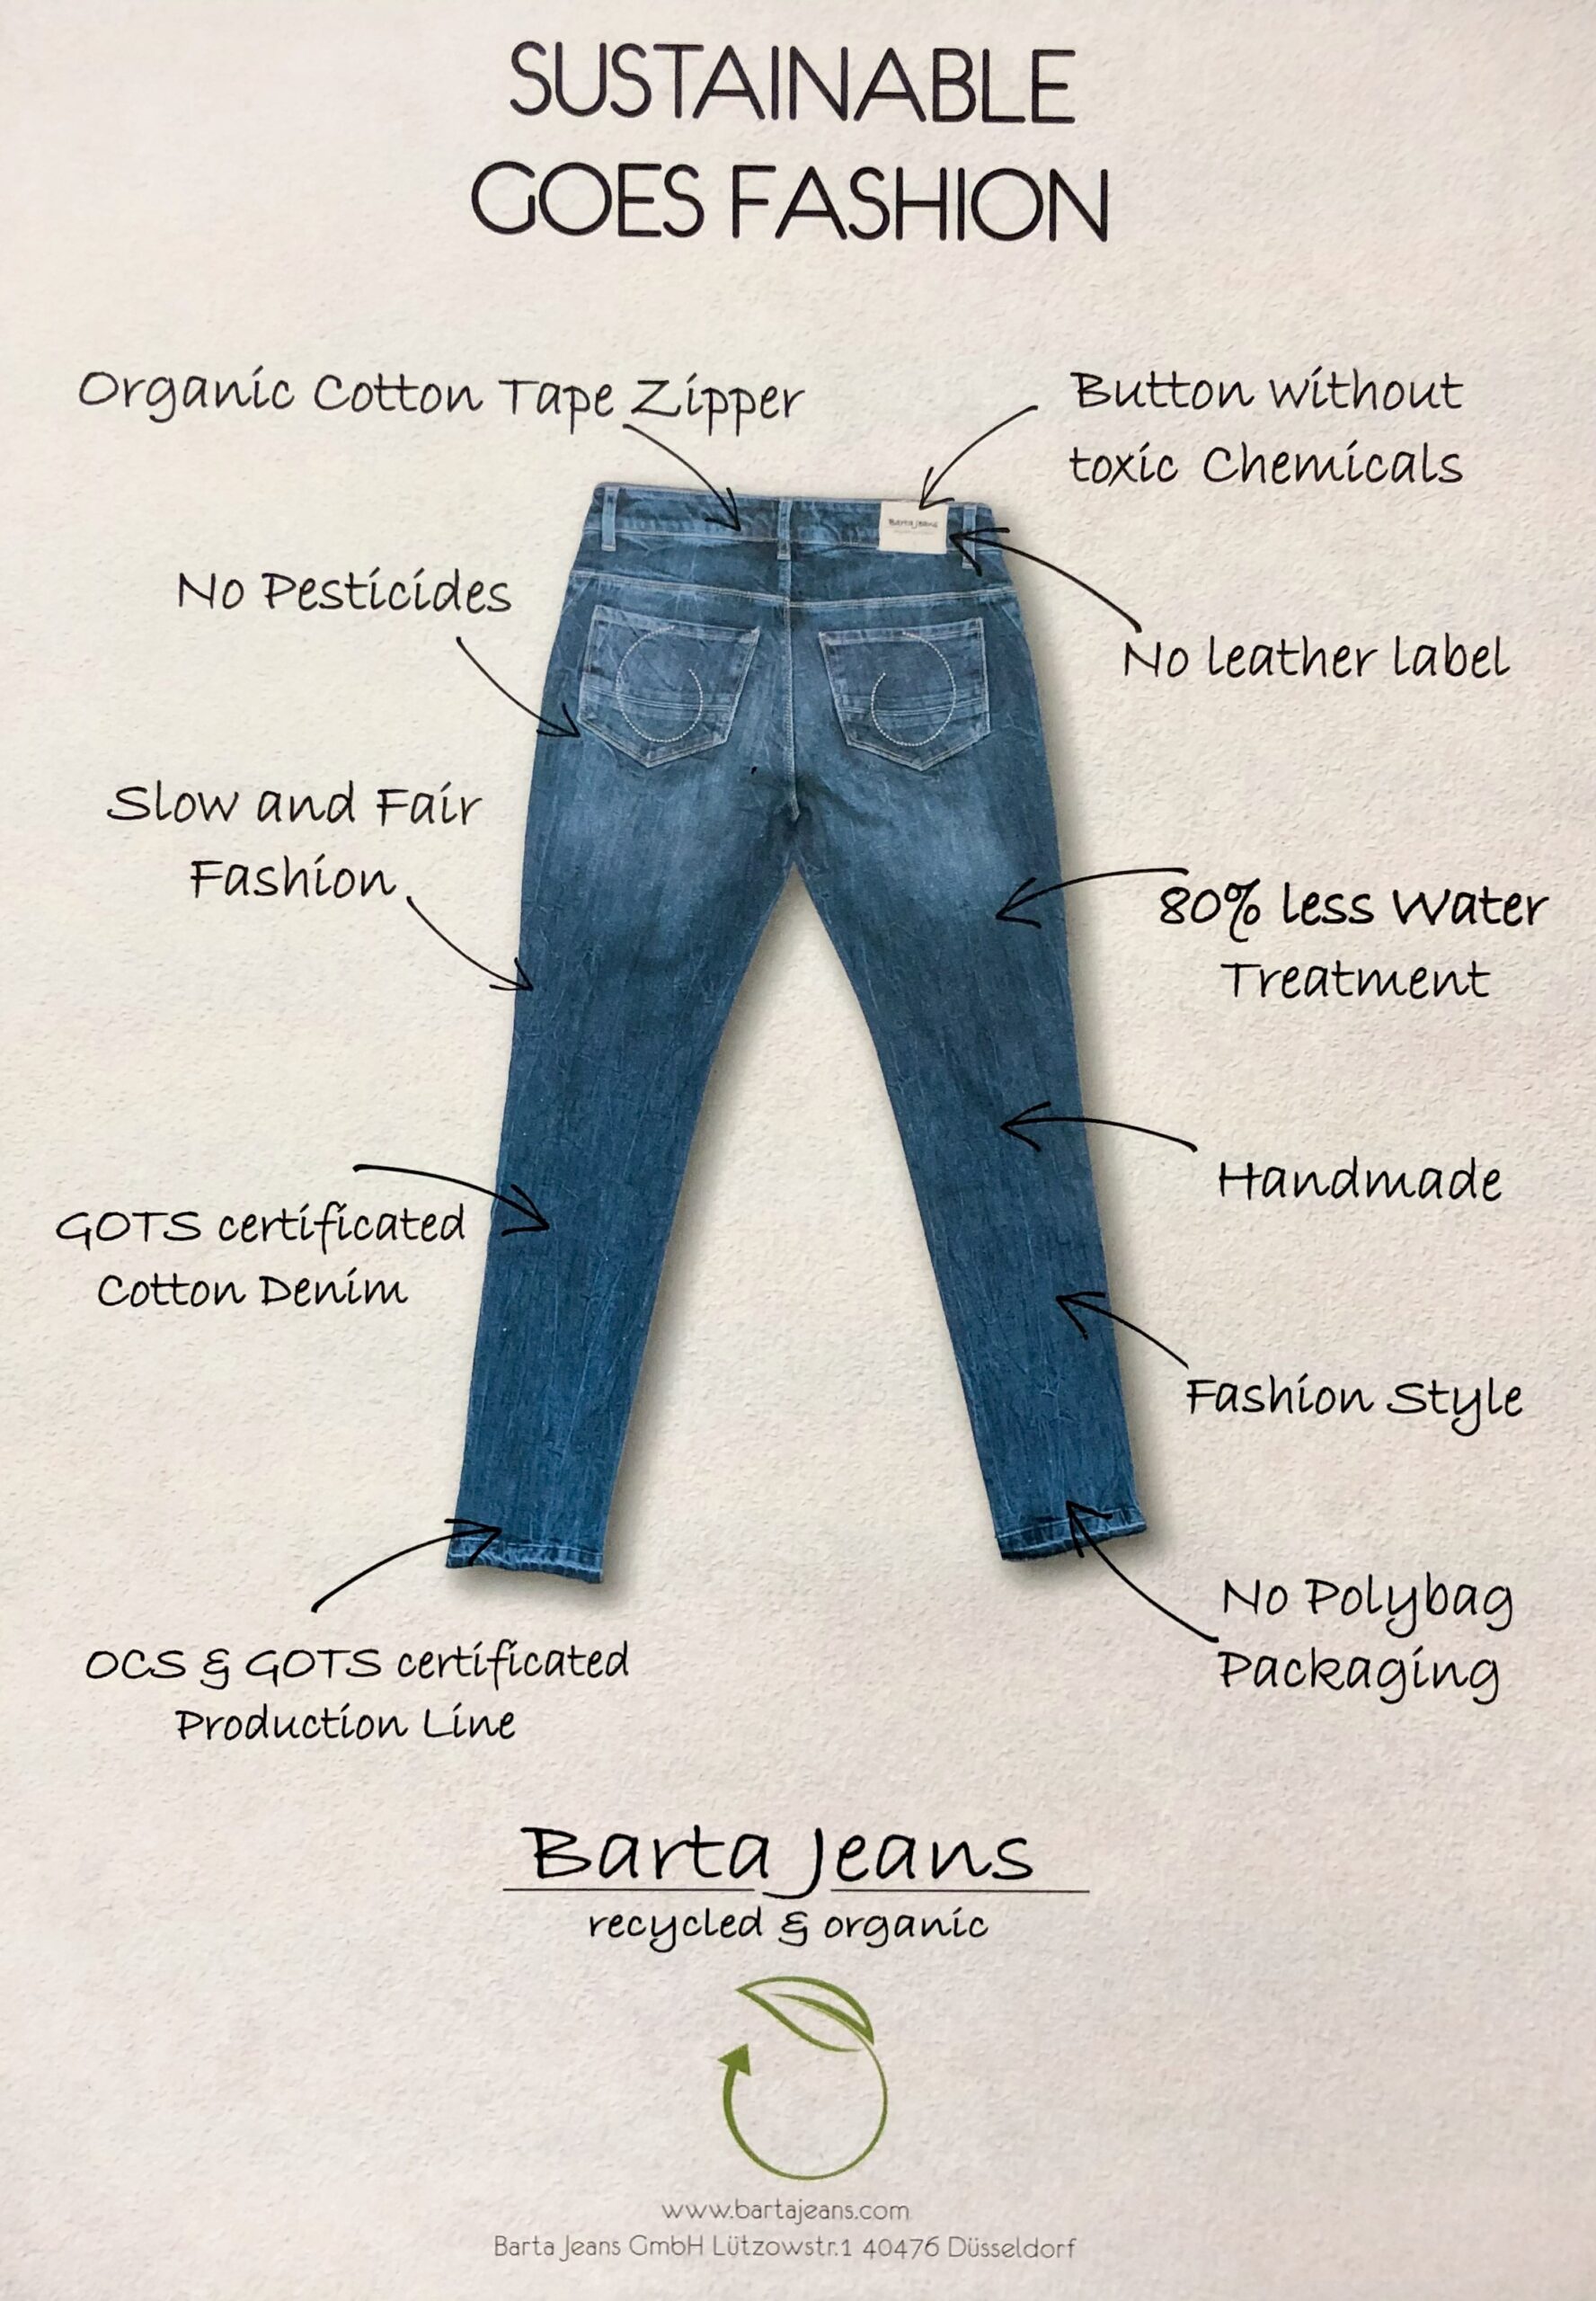 Barta Jeans